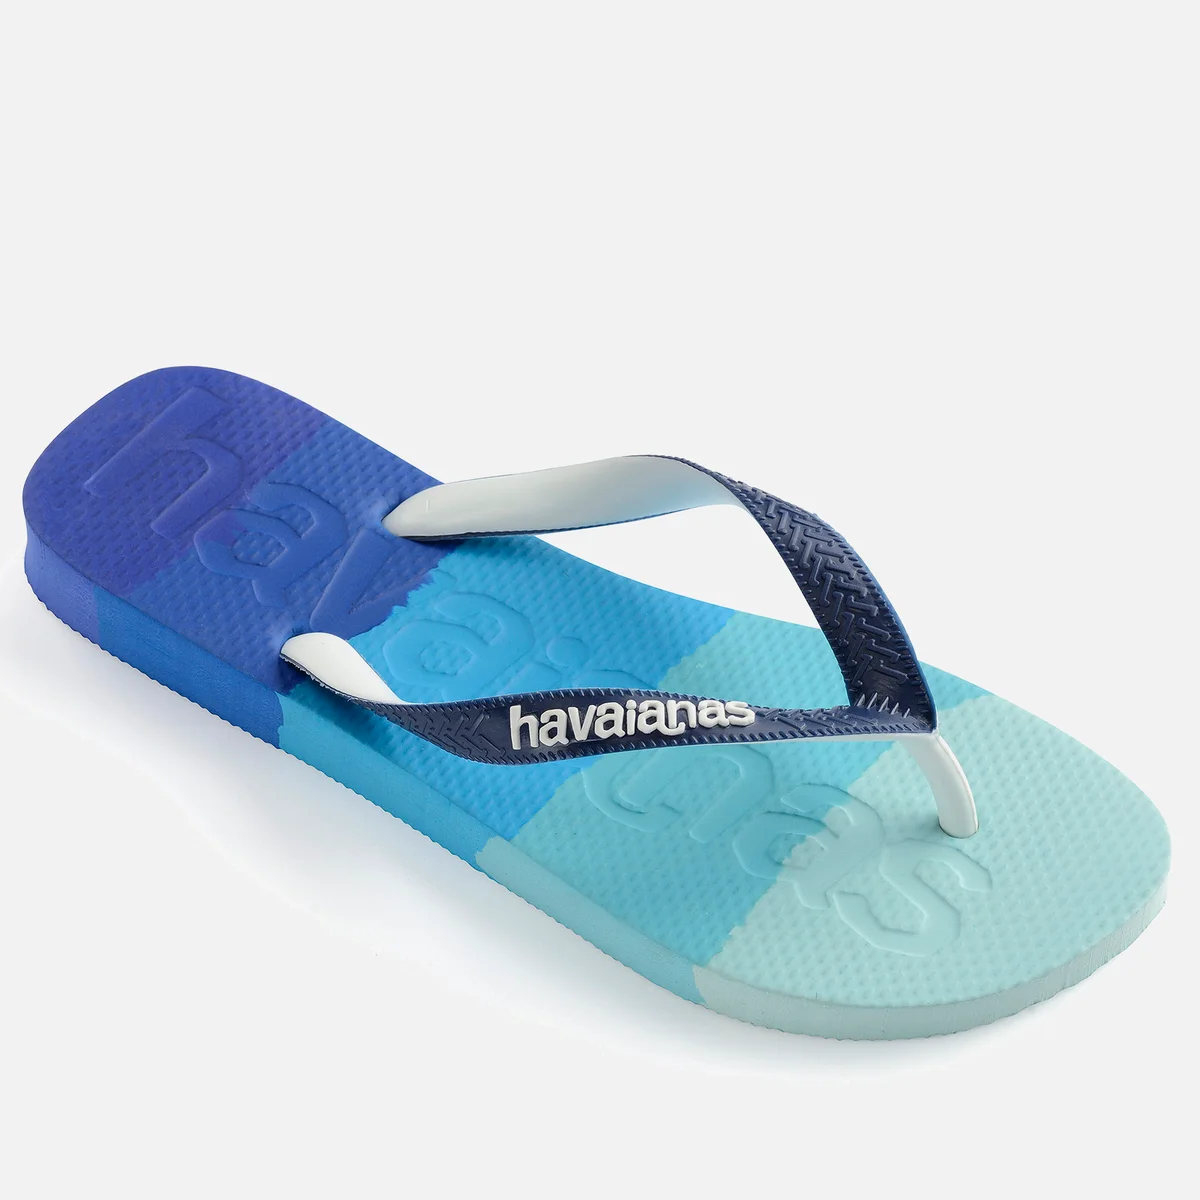 Havaianas Men's Top Logomania Multicolour Flip Flops - Gradient Marine Blue Image 1